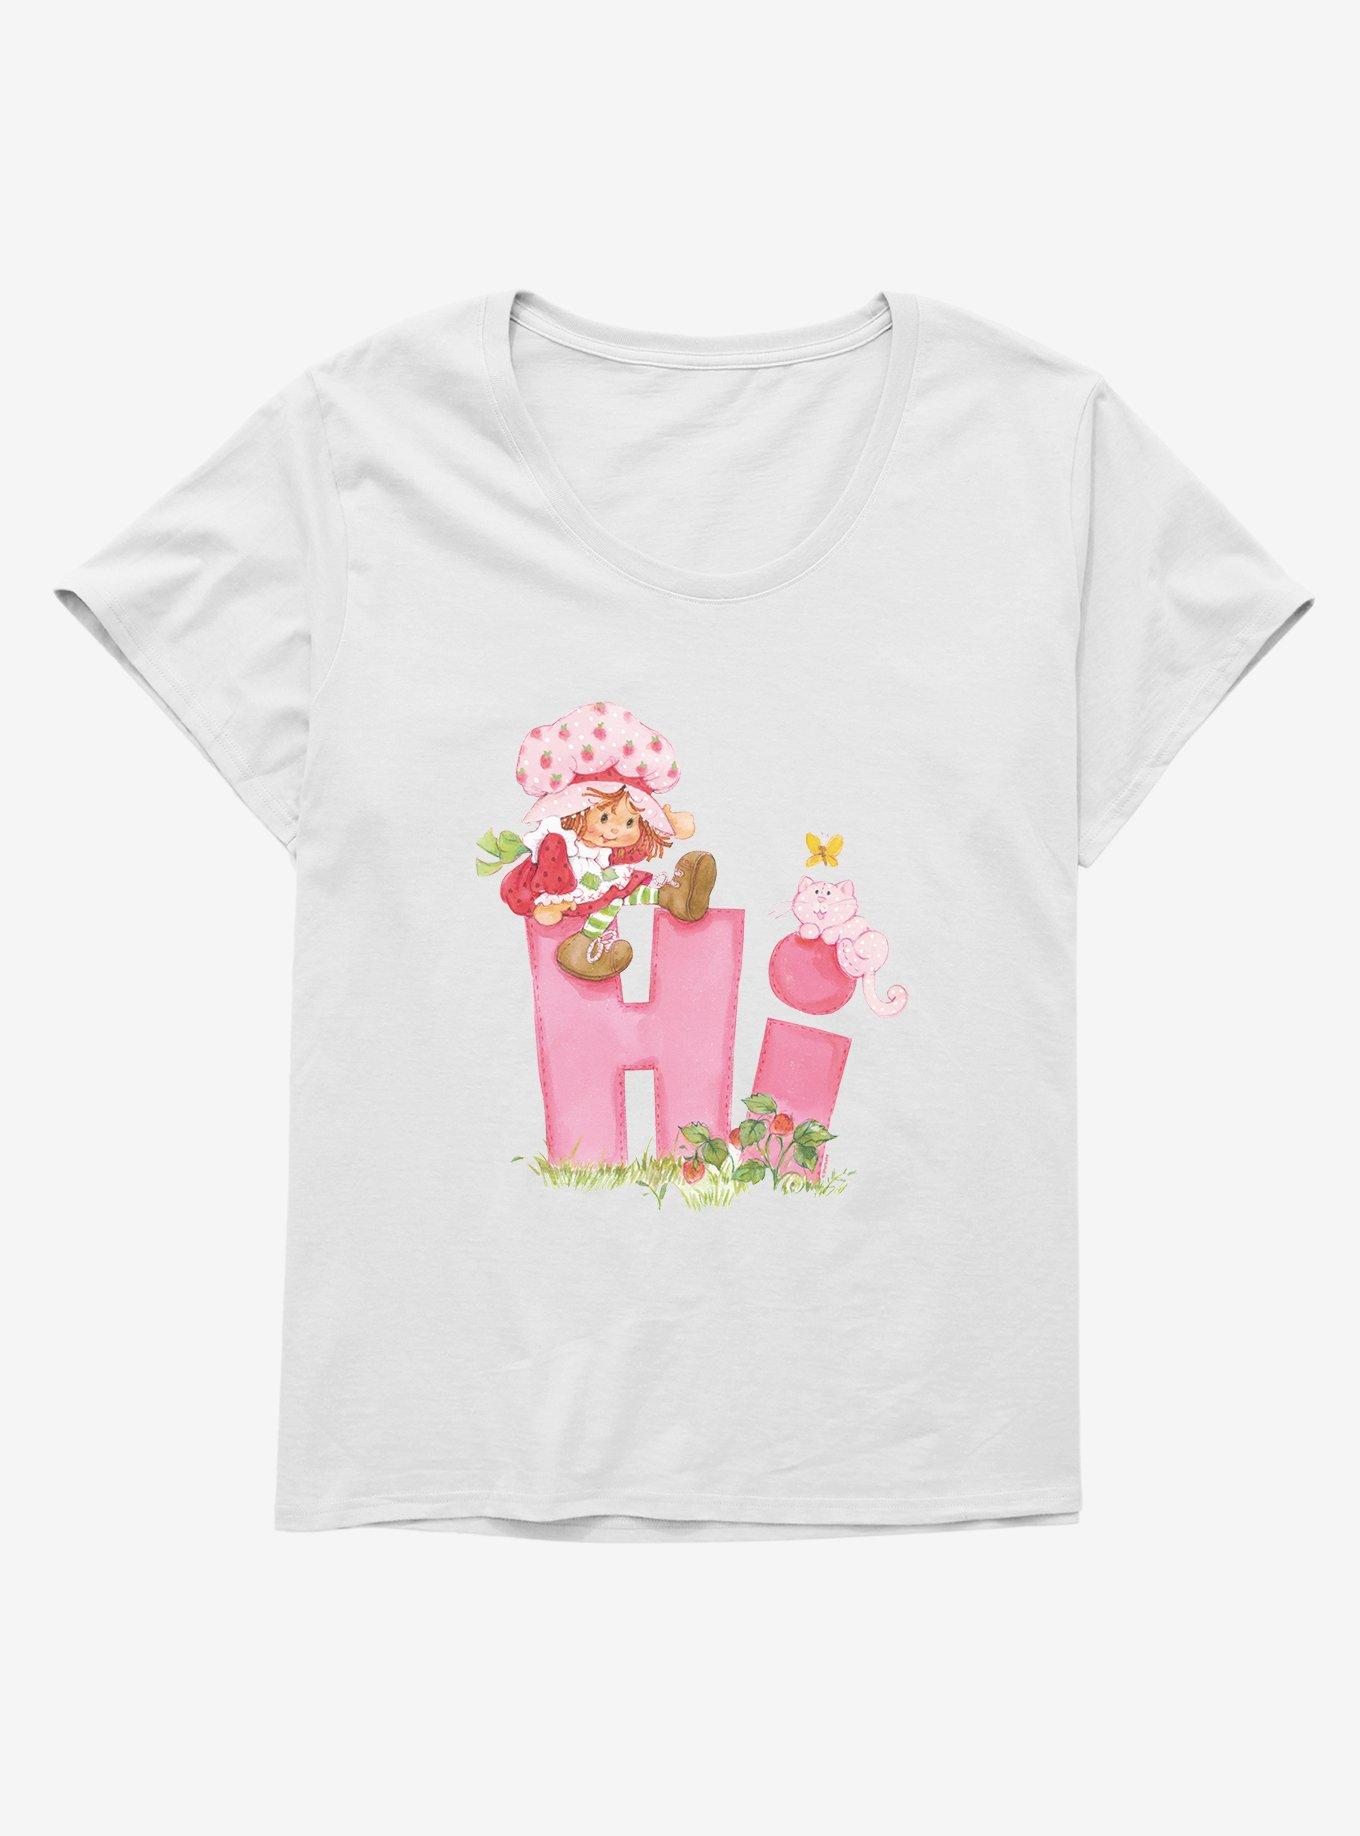 Strawberry Shortcake Hi Greeting Womens T-Shirt Plus Size, WHITE, hi-res